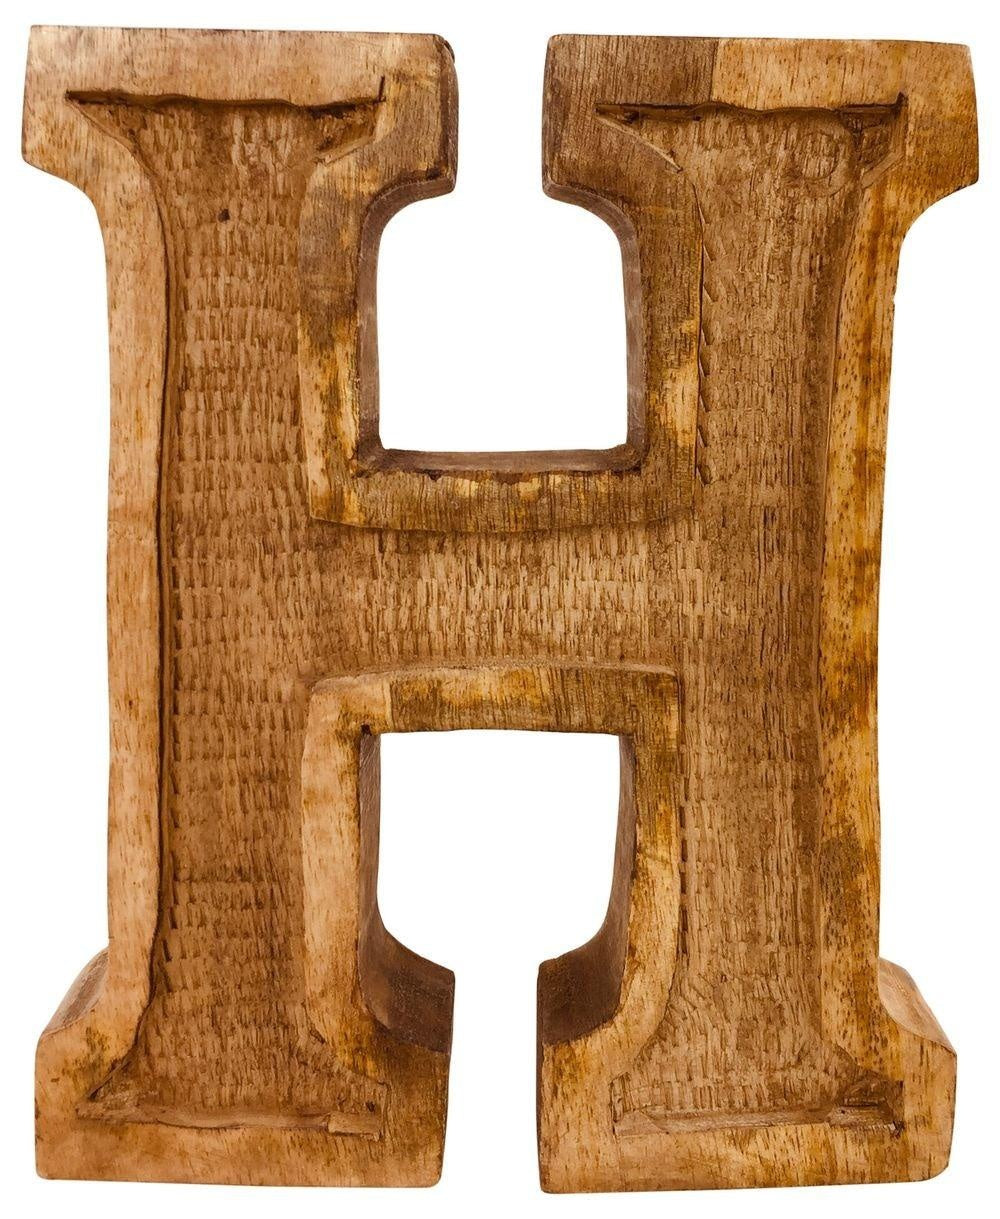 Hand Carved Wooden Embossed Letter H